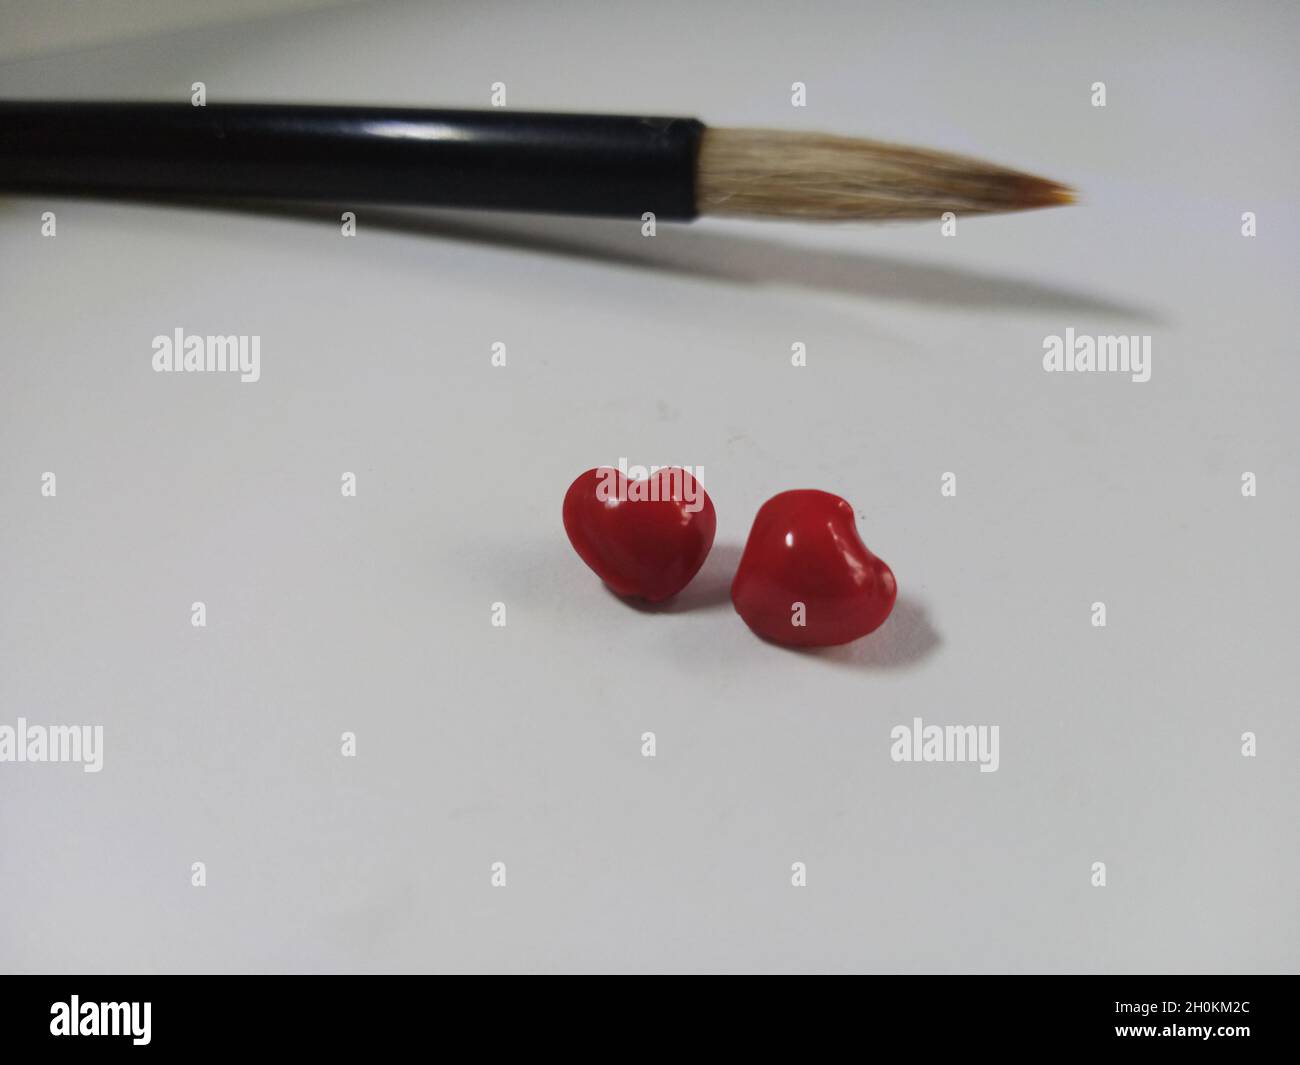 china brush with red heart shape saga seeds Stock Photo